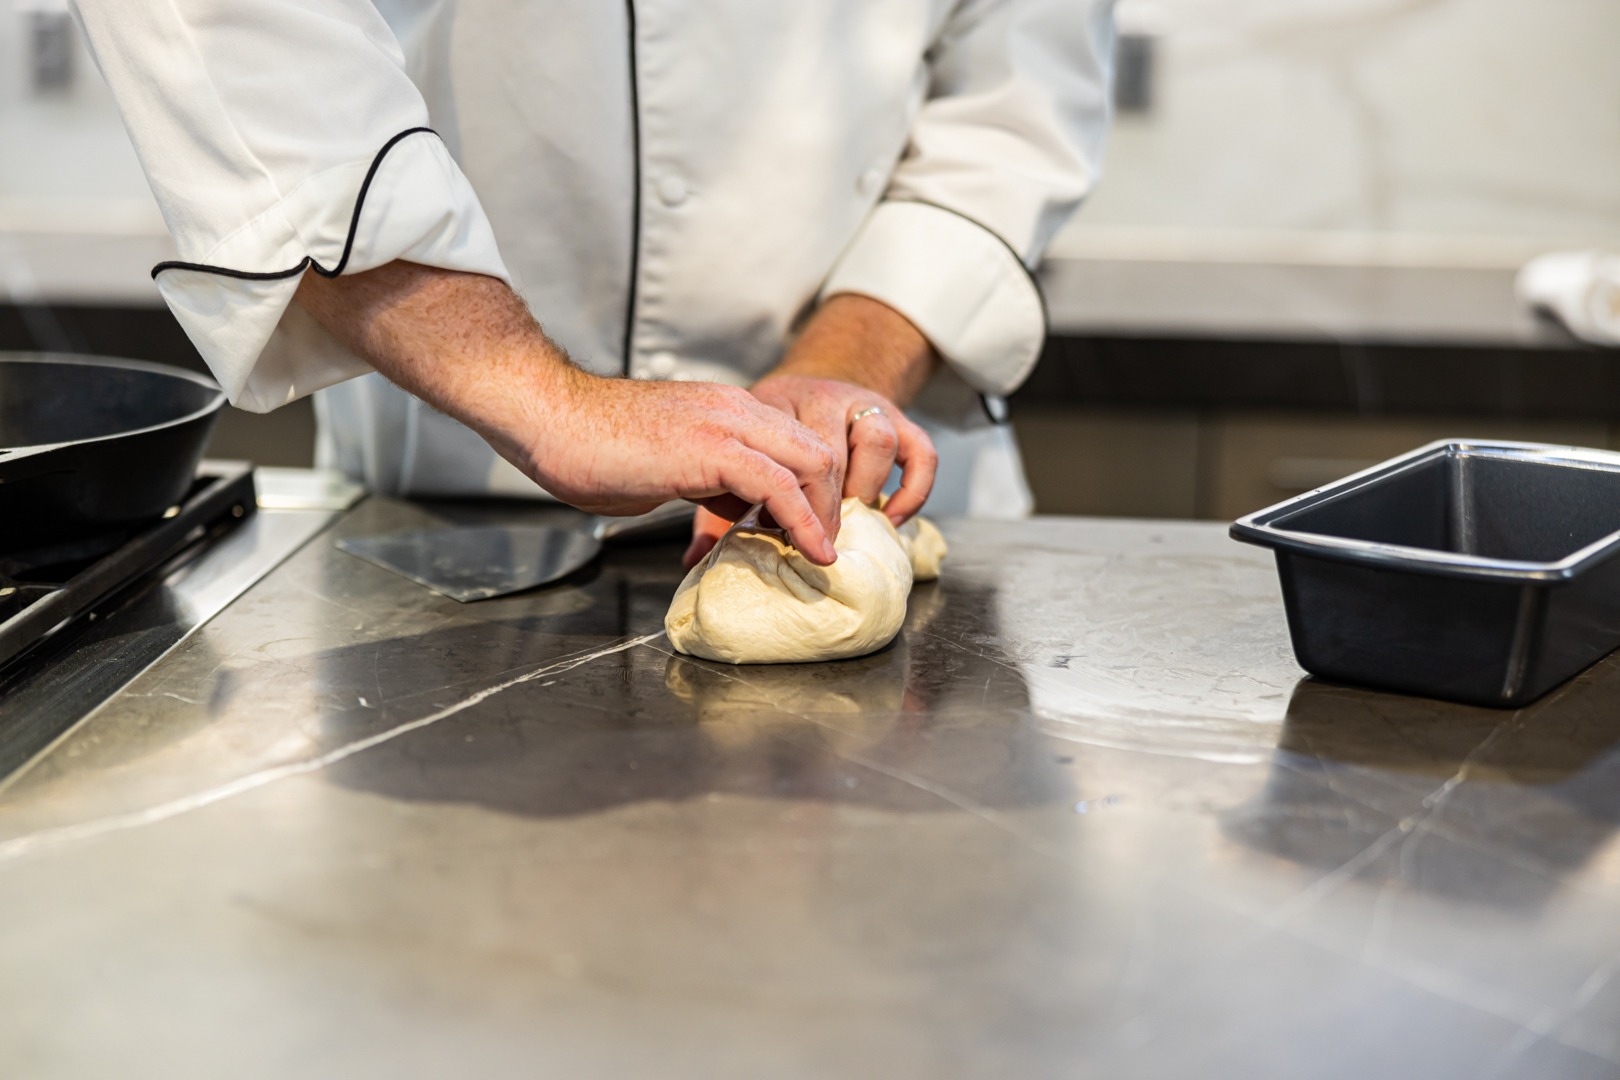 Fold the dough over into a nice shape